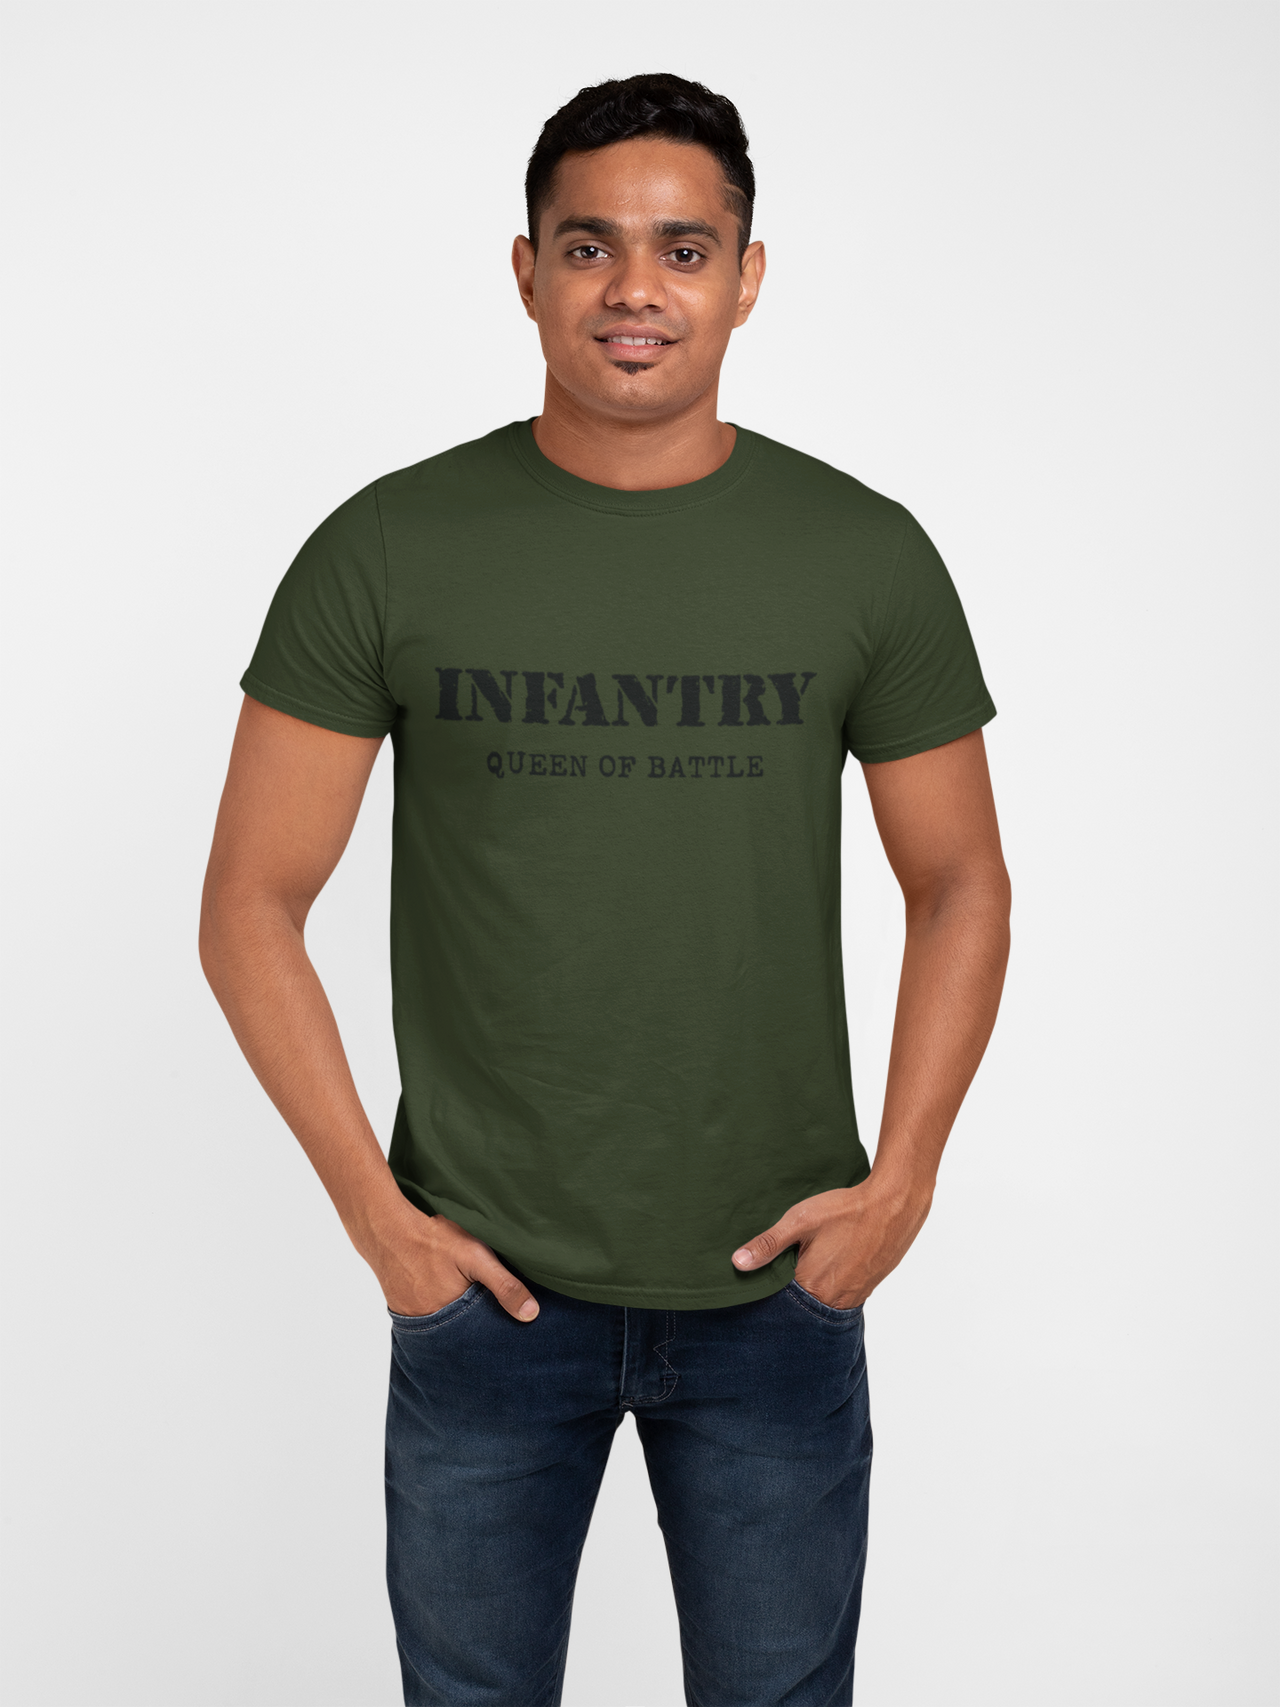 Infantry T-shirt - Queen of Battle (Men)